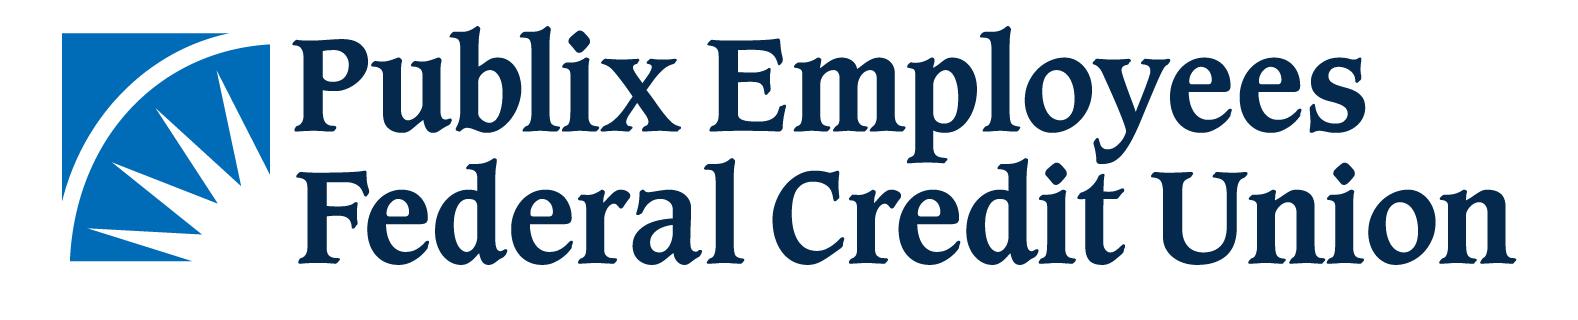 Publix Employees Federal Credit Union logo